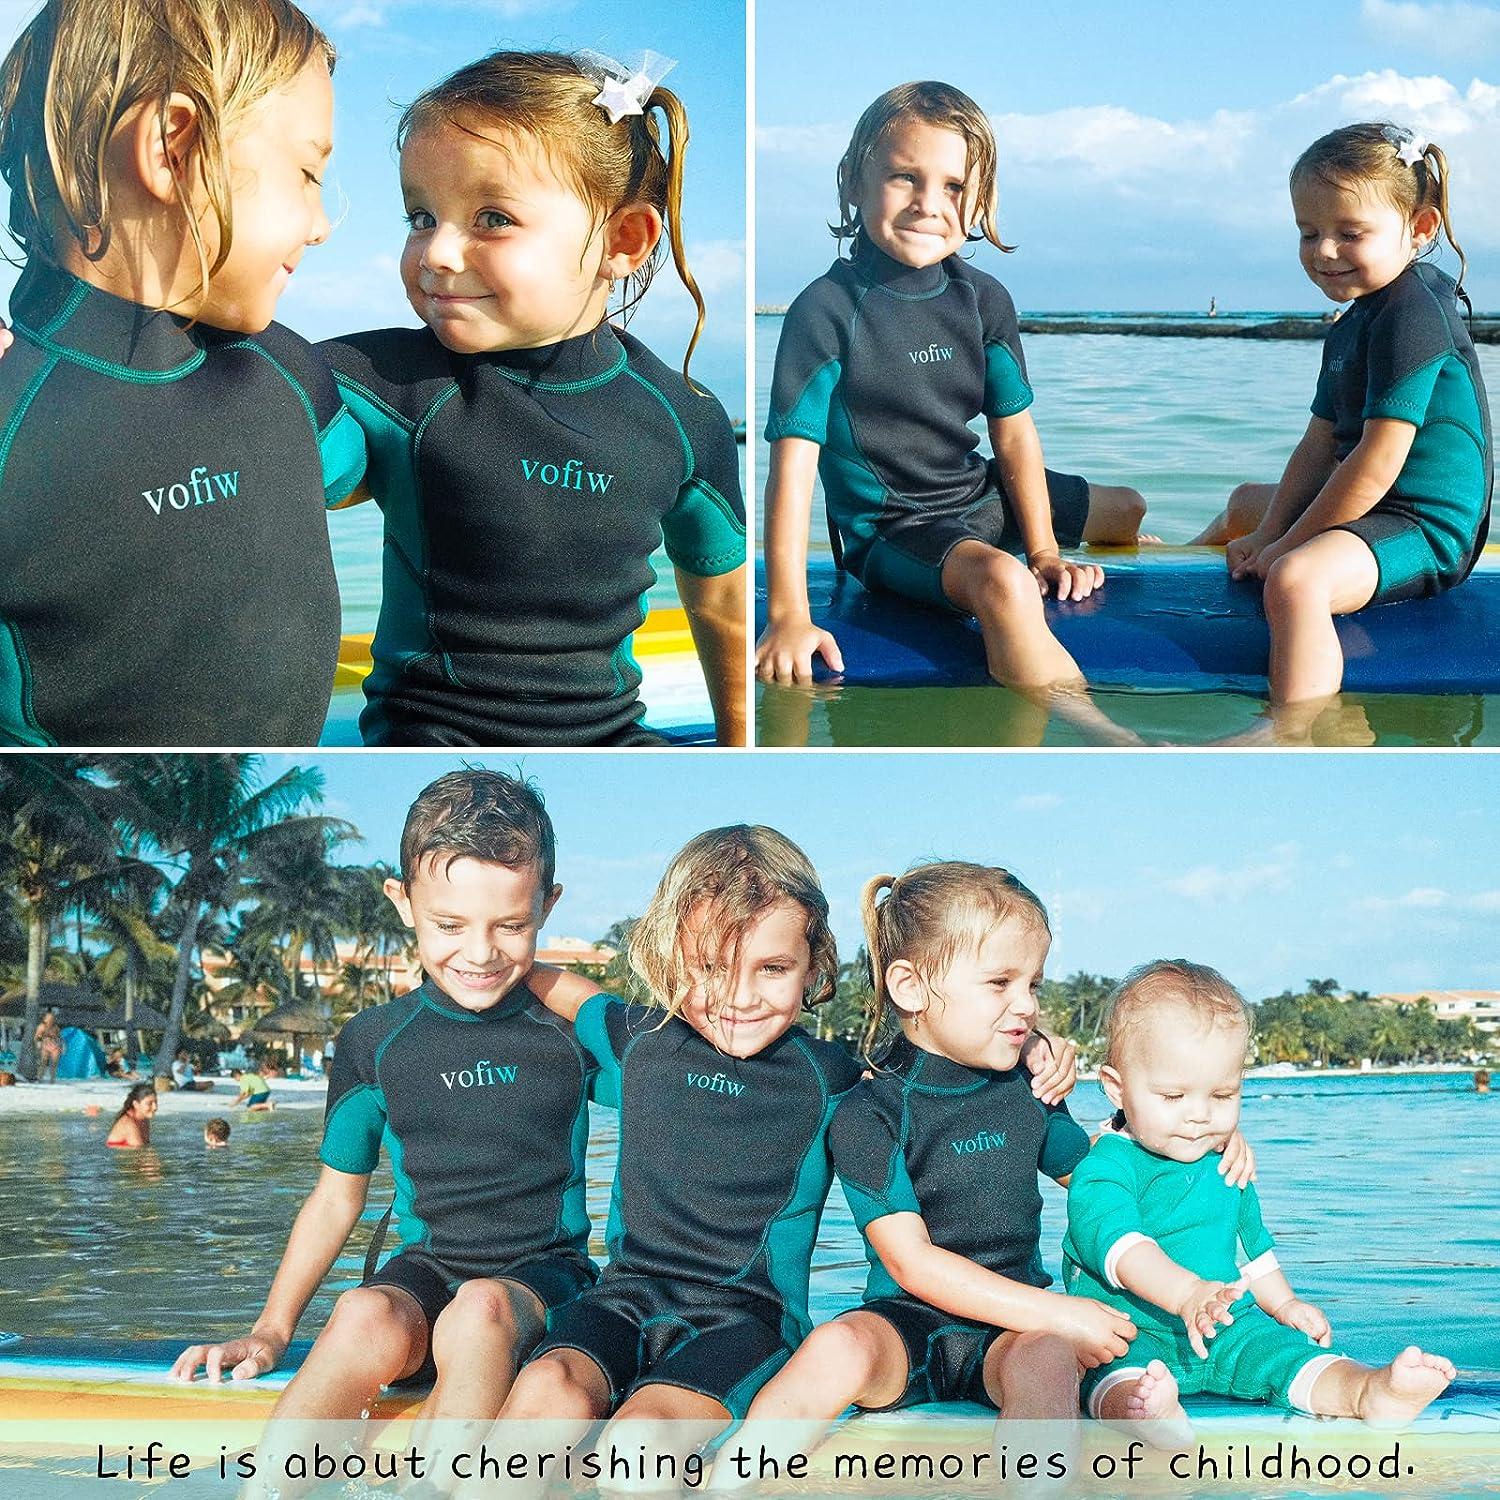 Kids Wetsuit 2.5mm Neoprene Nylon Thermal Swimsuit, Full Body Surf Suit for  Girls Boys and , Wet Suit Swimming - Green S 